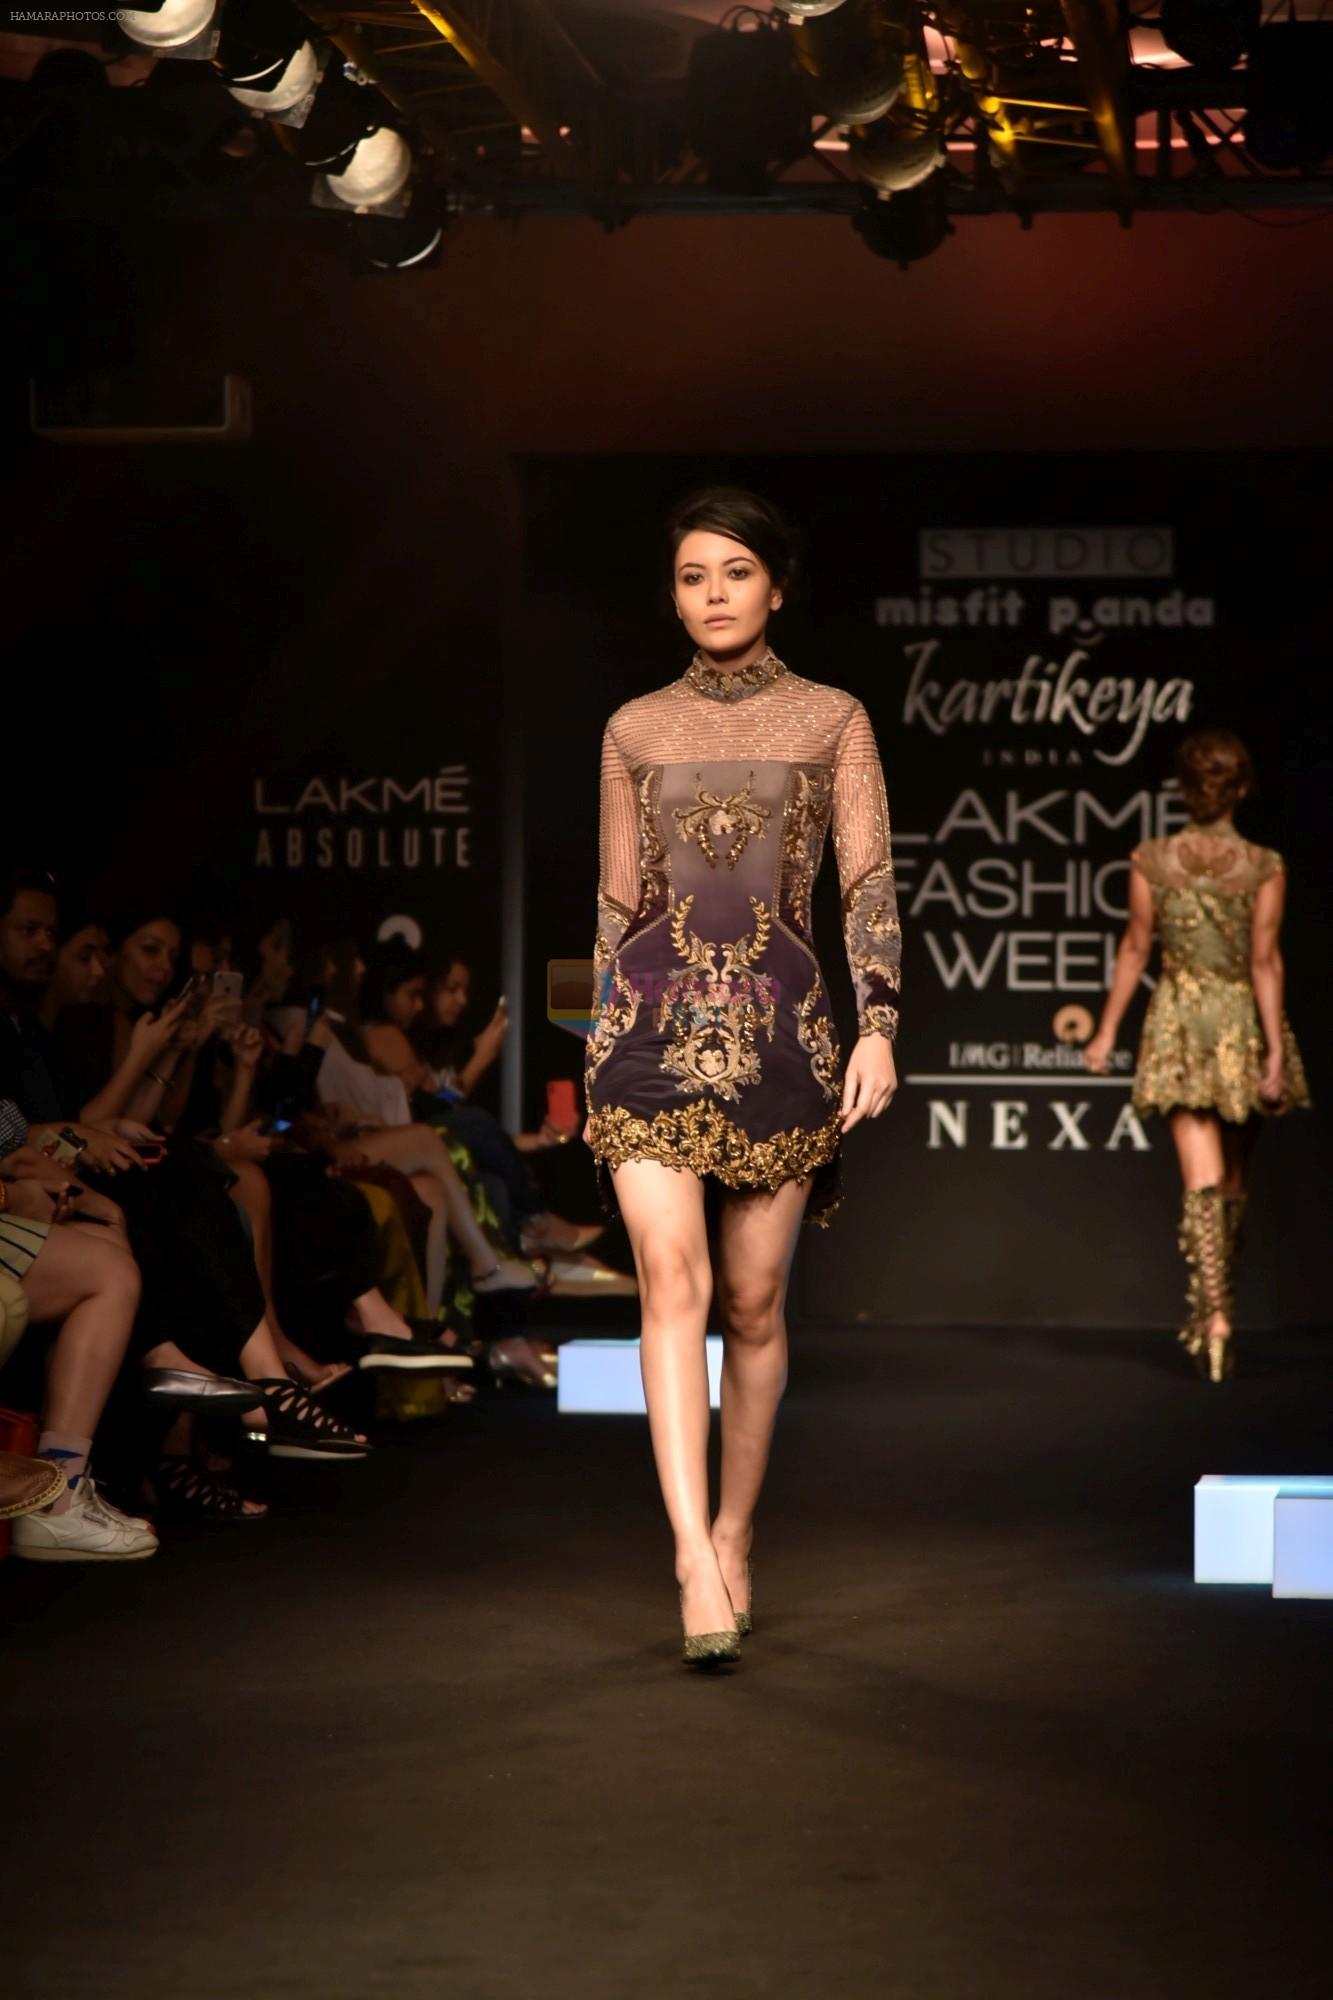 Model at KARTIKEYA MISFIT PANDA SHOW at Lakme Fashion Week on 25th Aug 2018